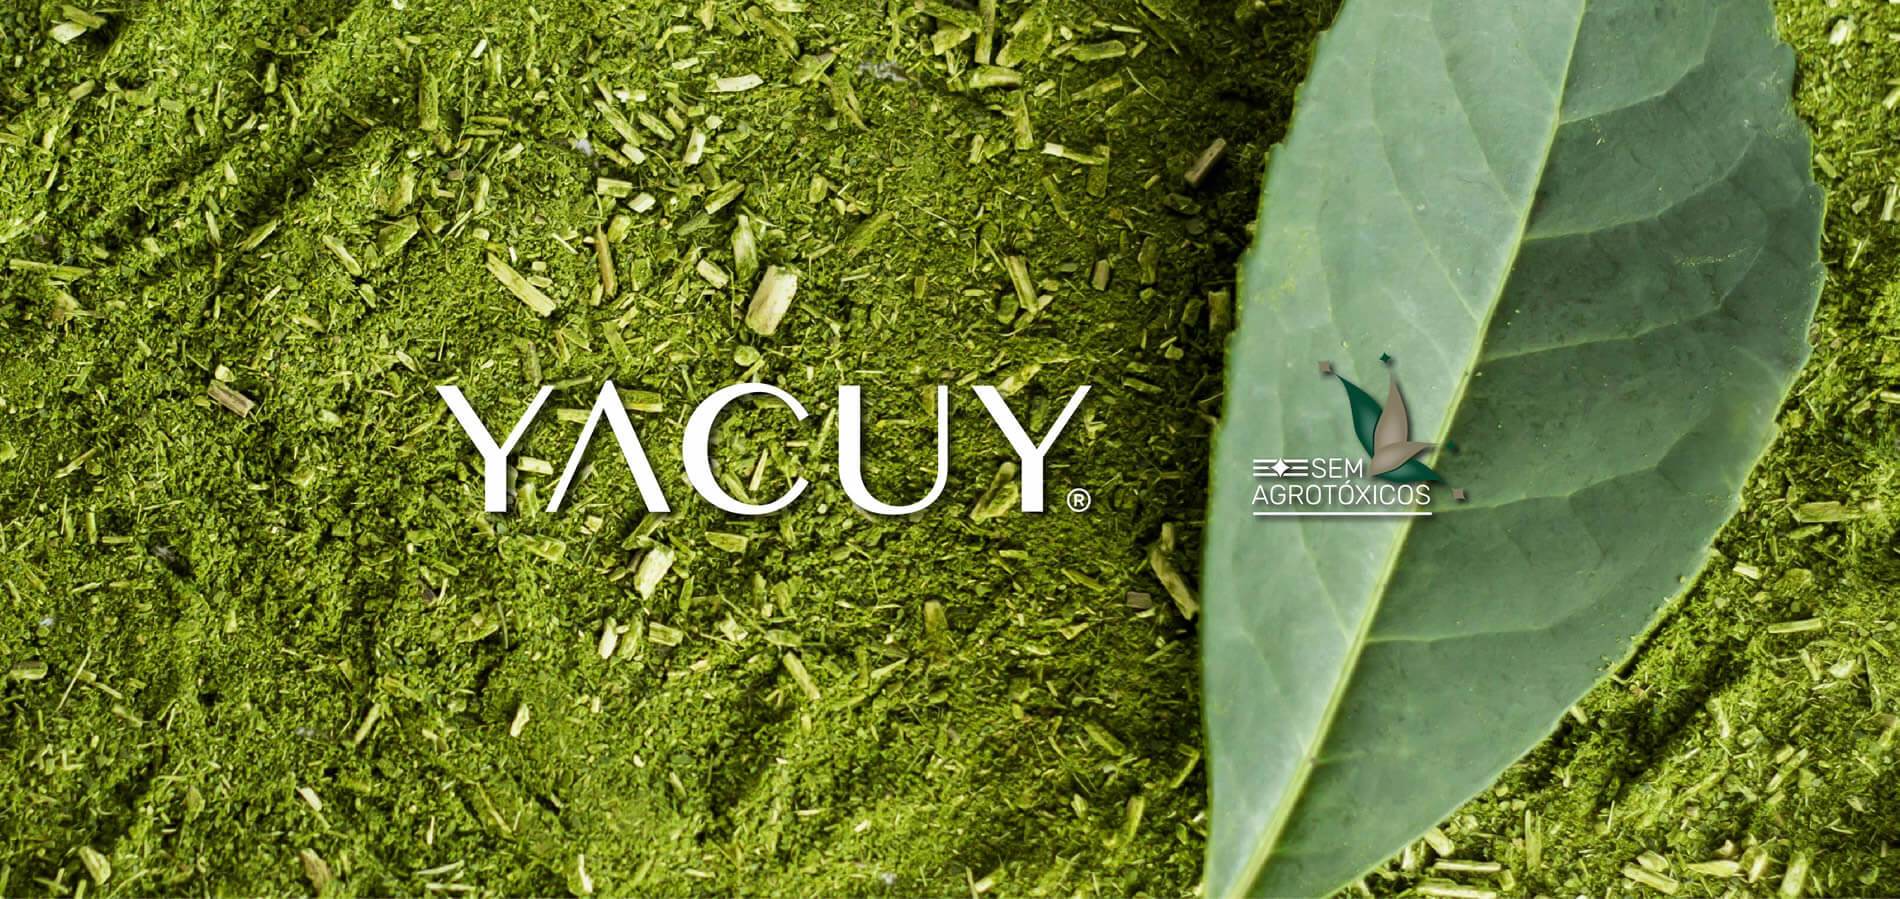 Yacuy - Sin agroquímicos